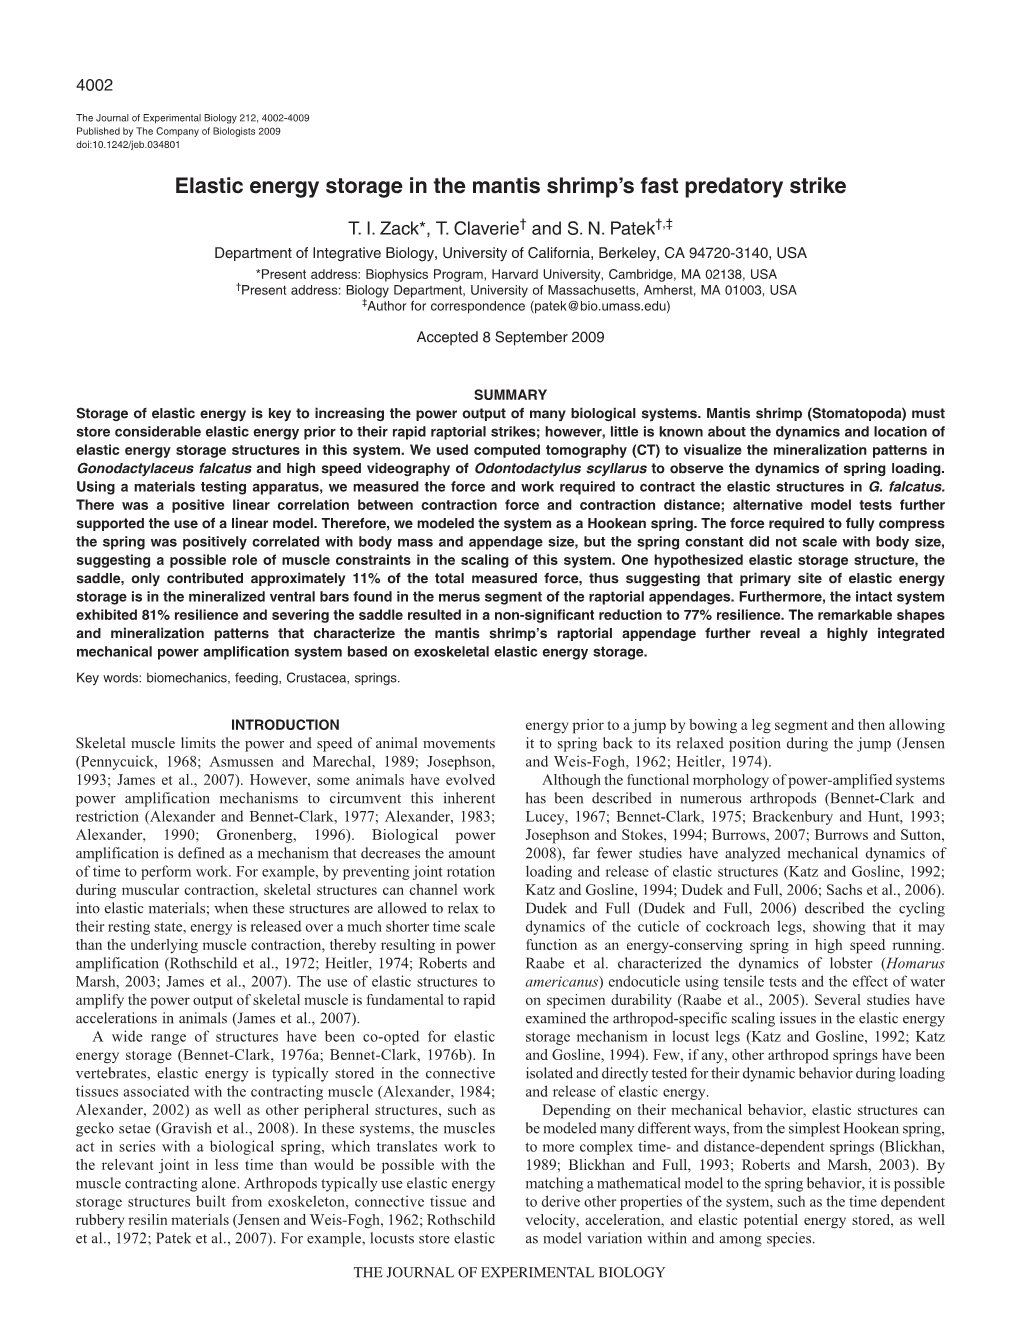 Elastic Energy Storage in the Mantis Shrimp's Fast Predatory Strike